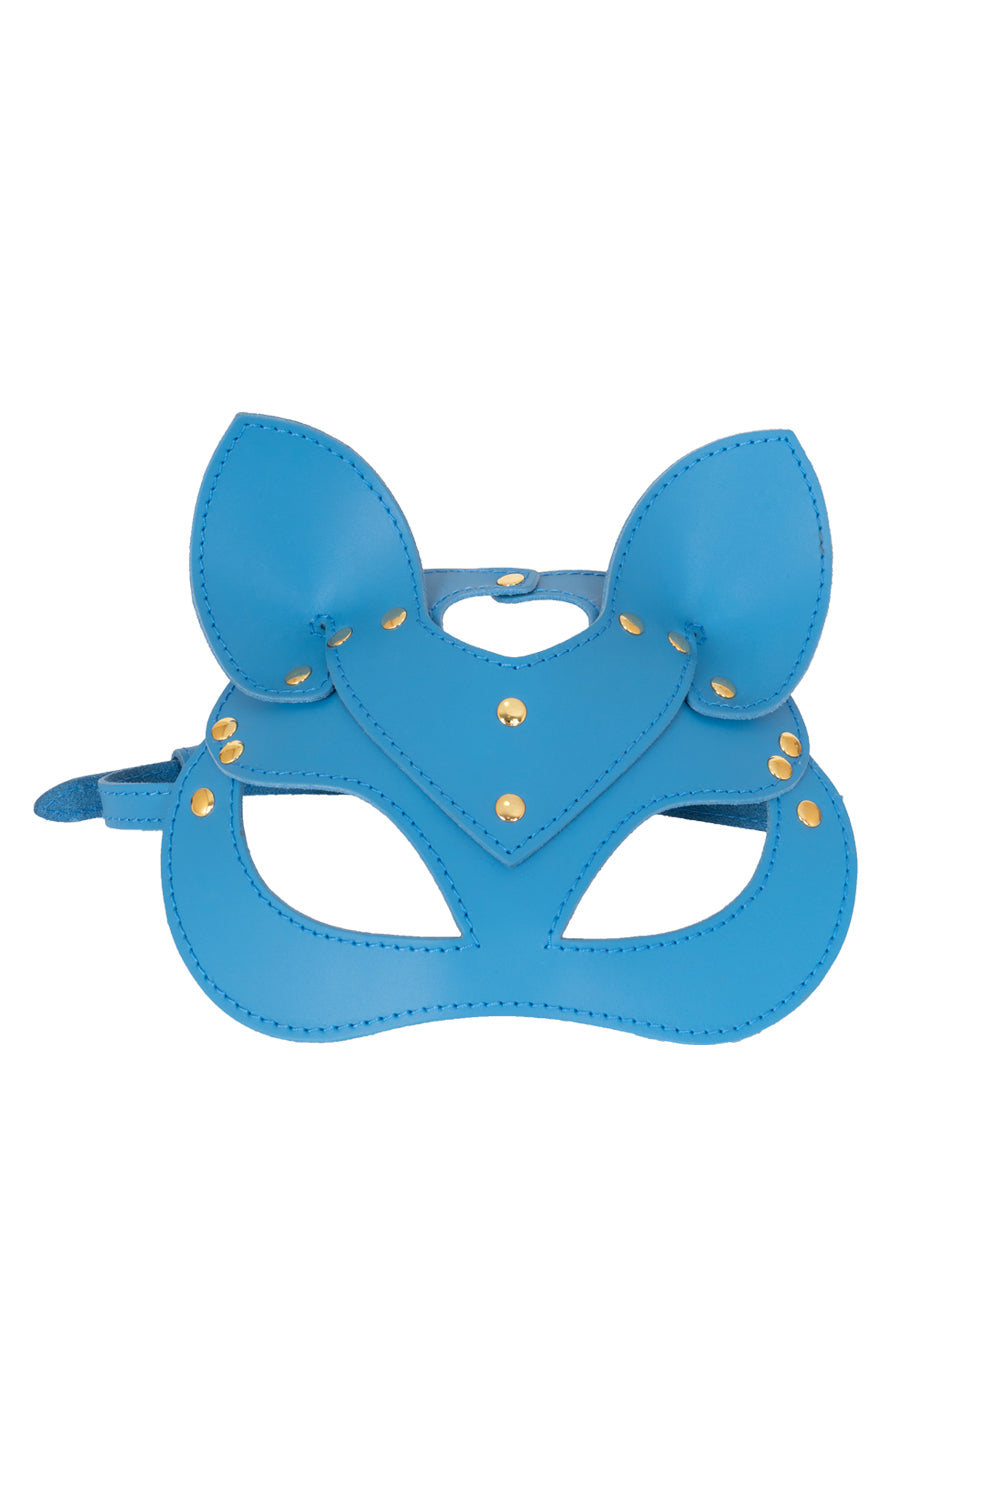 Leather сat mask, kitty fetish mask. Blue